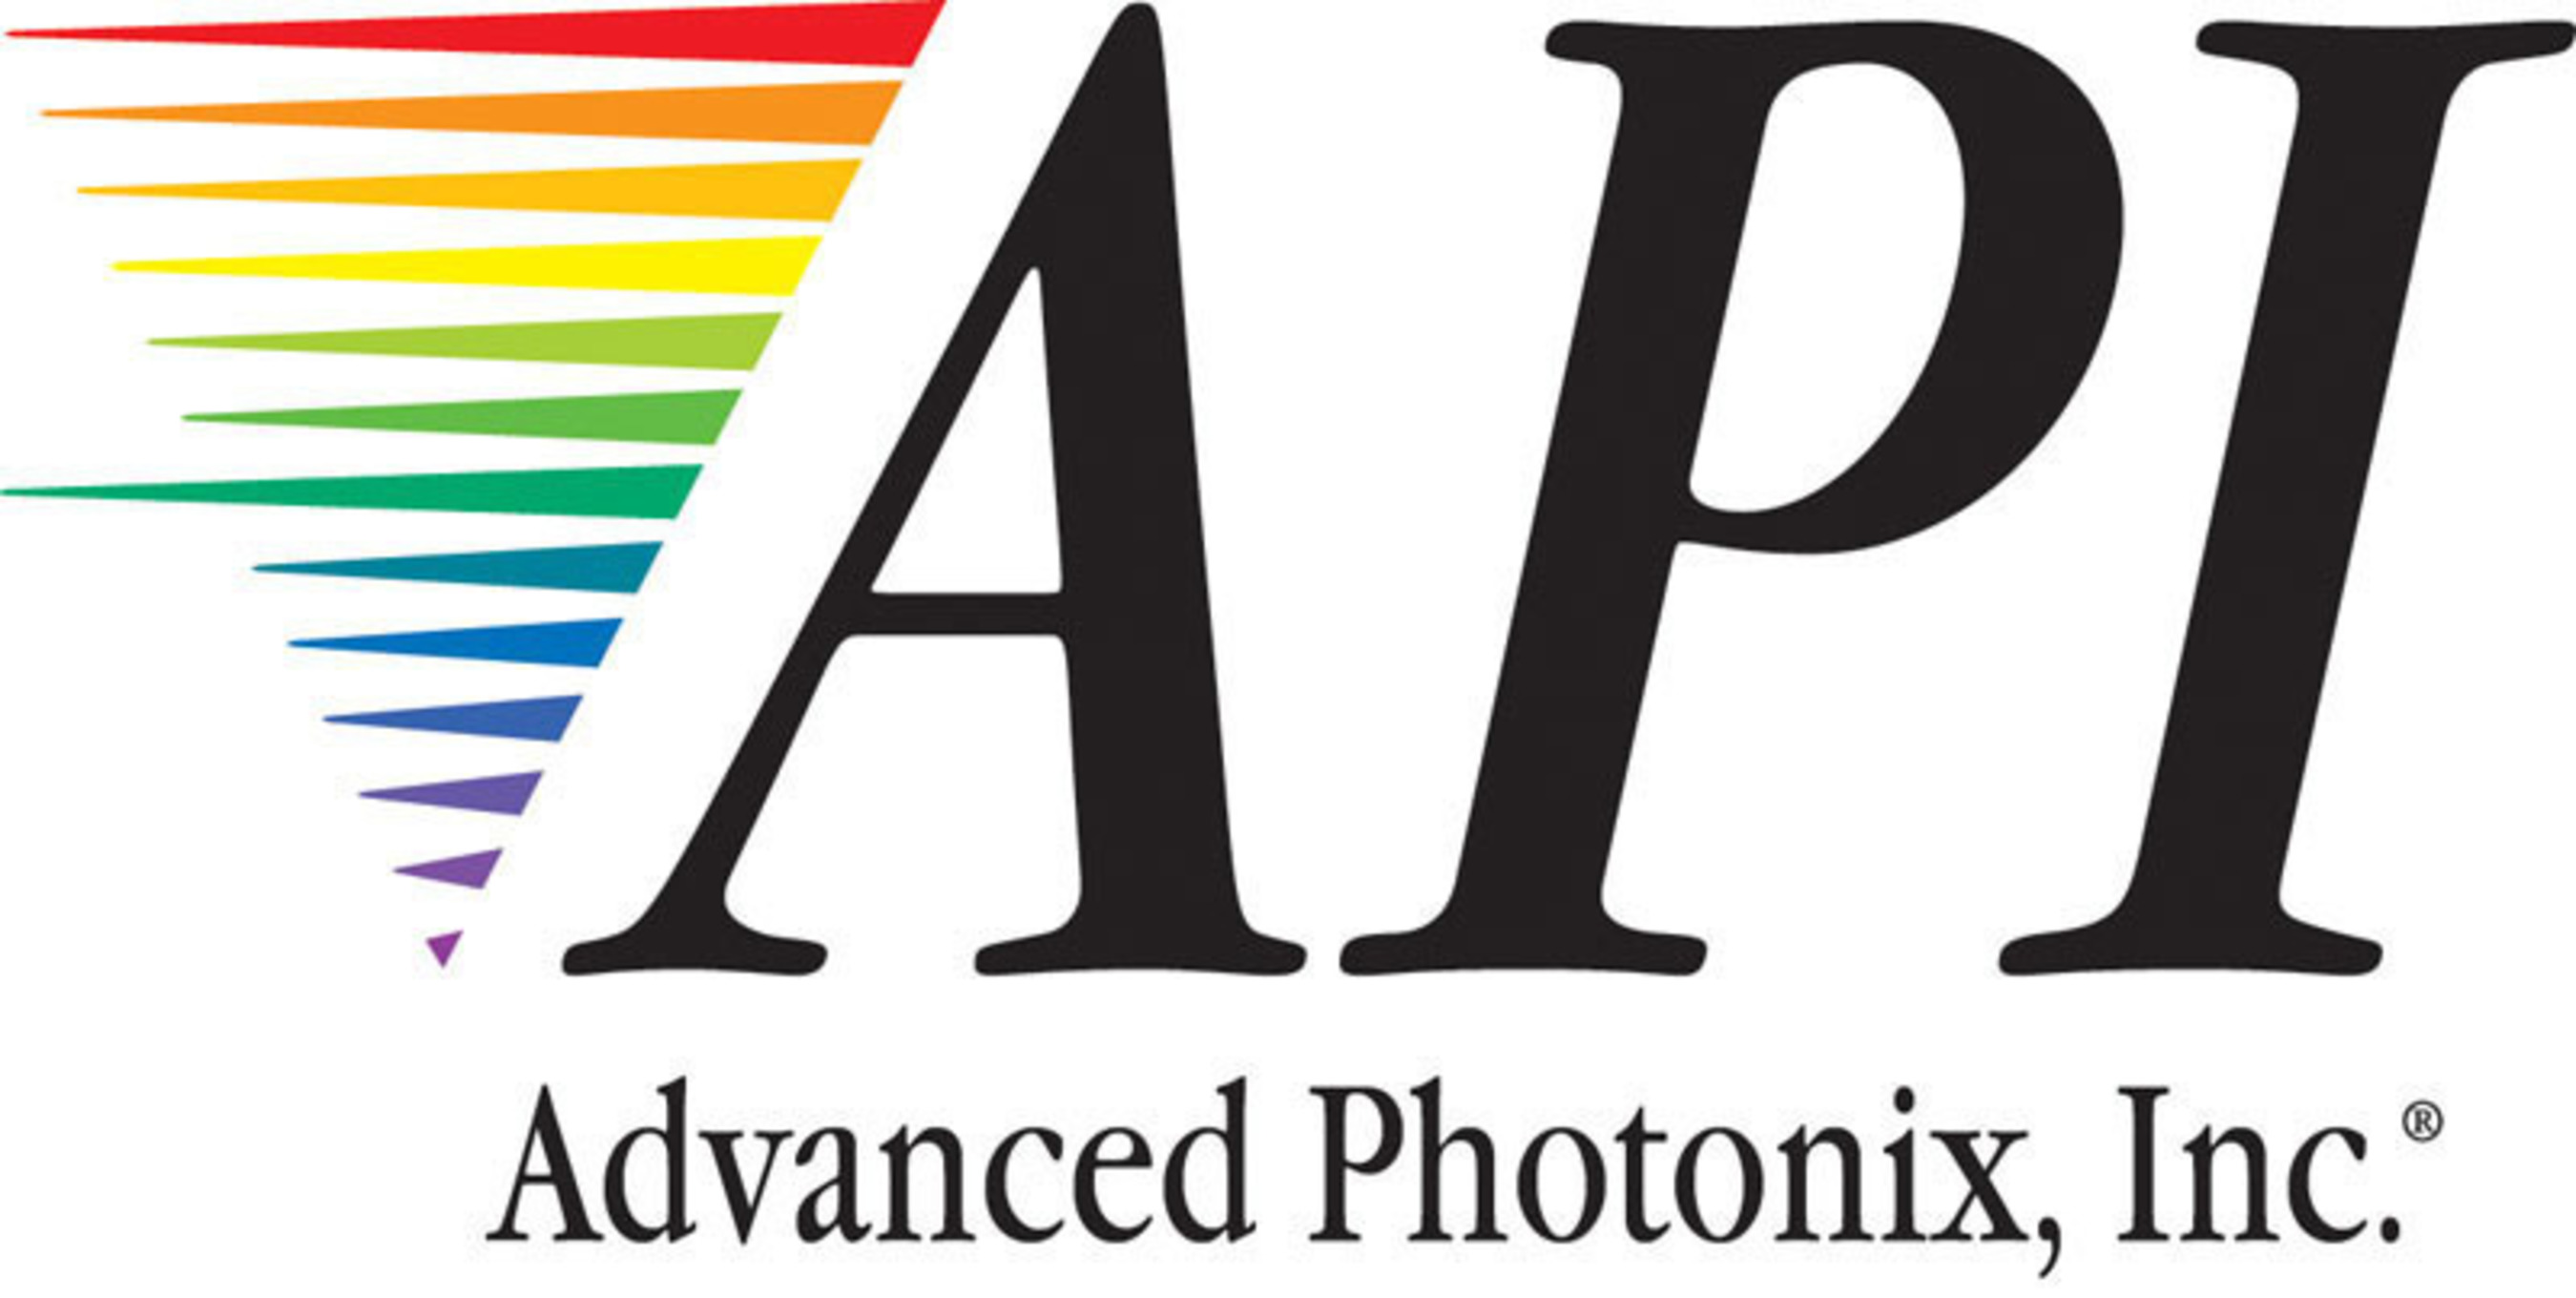 Advanced Photonix, Inc. (PRNewsFoto/Advanced Photonix, Inc) (PRNewsFoto/Advanced Photonix, Inc.)